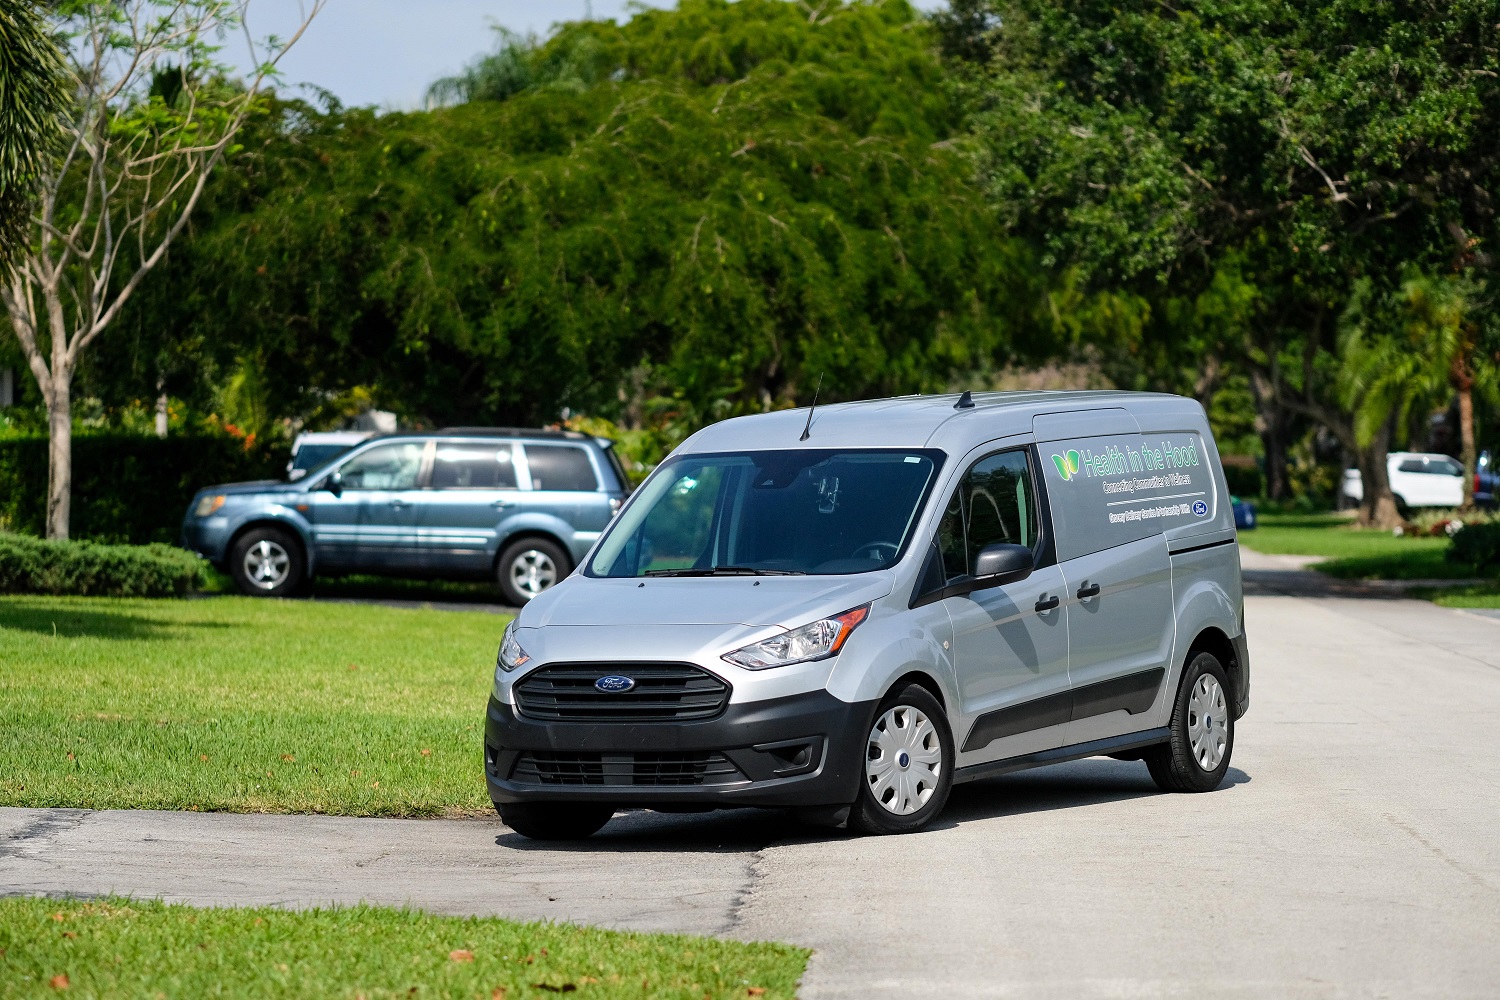 Ford Transit Connect isn't a minivan